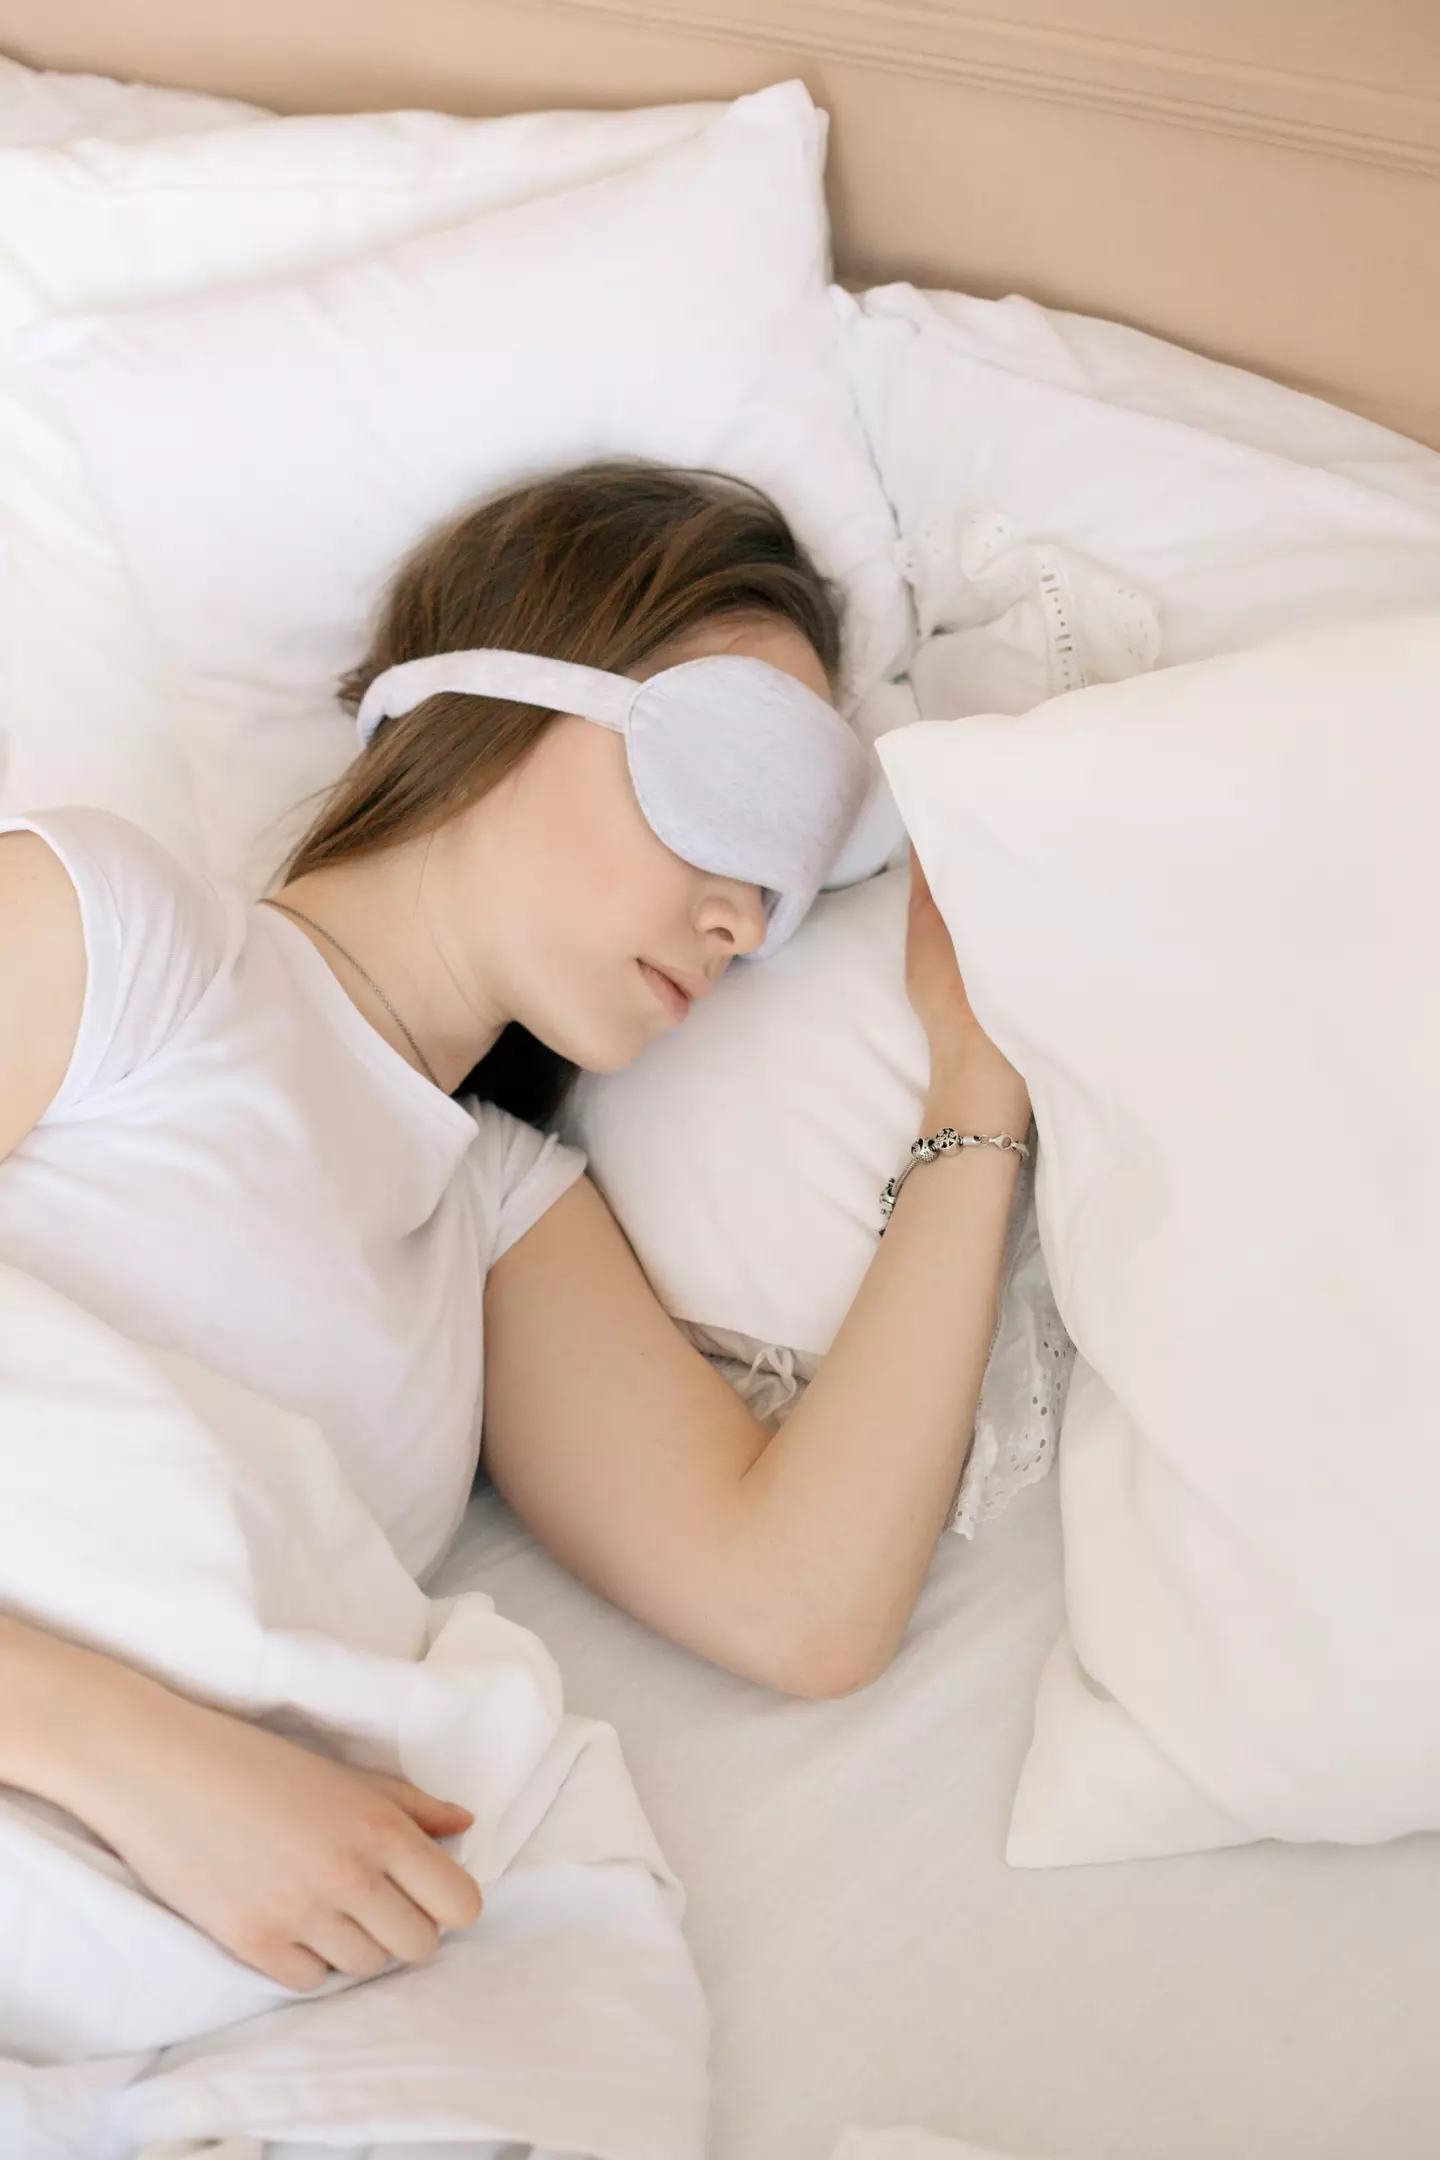 'Sleep Doctor' Dr Michael Breus shared how the 'three 15s' method can help you get a good night's sleep.